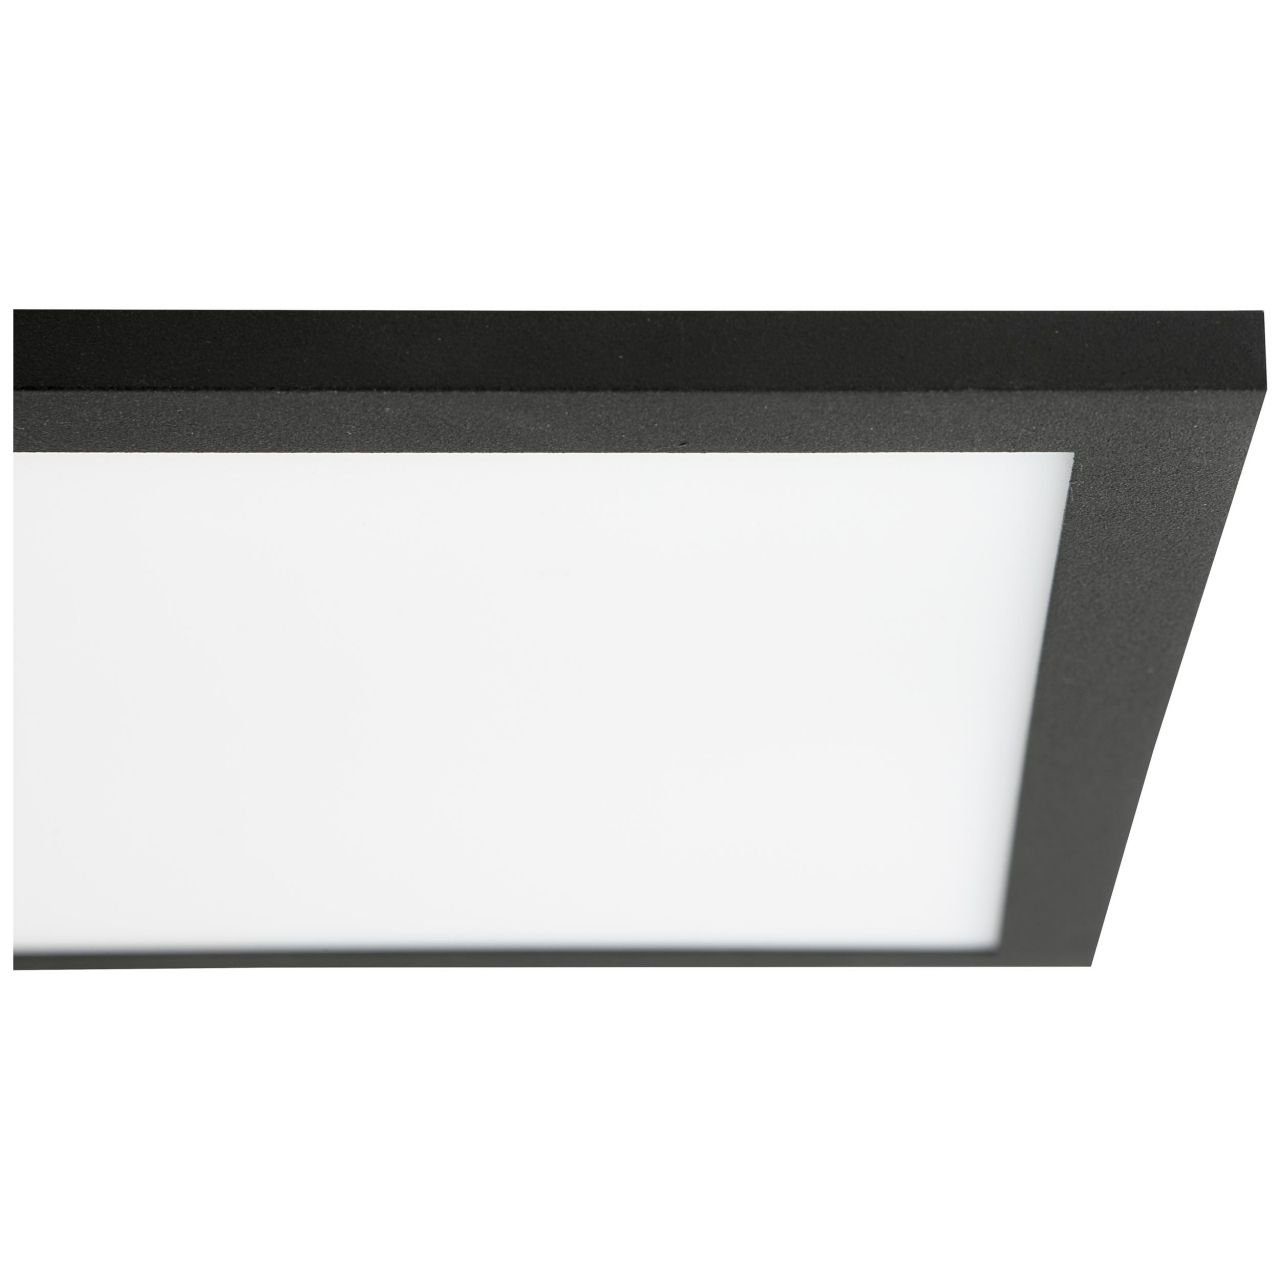 LED 4000 lm, x cm, Metall/Kunststoff, Buffi, wechselbar, 30 Brilliant LED Panel 120 schwarz sand kaltweiß, Neutralweiß,